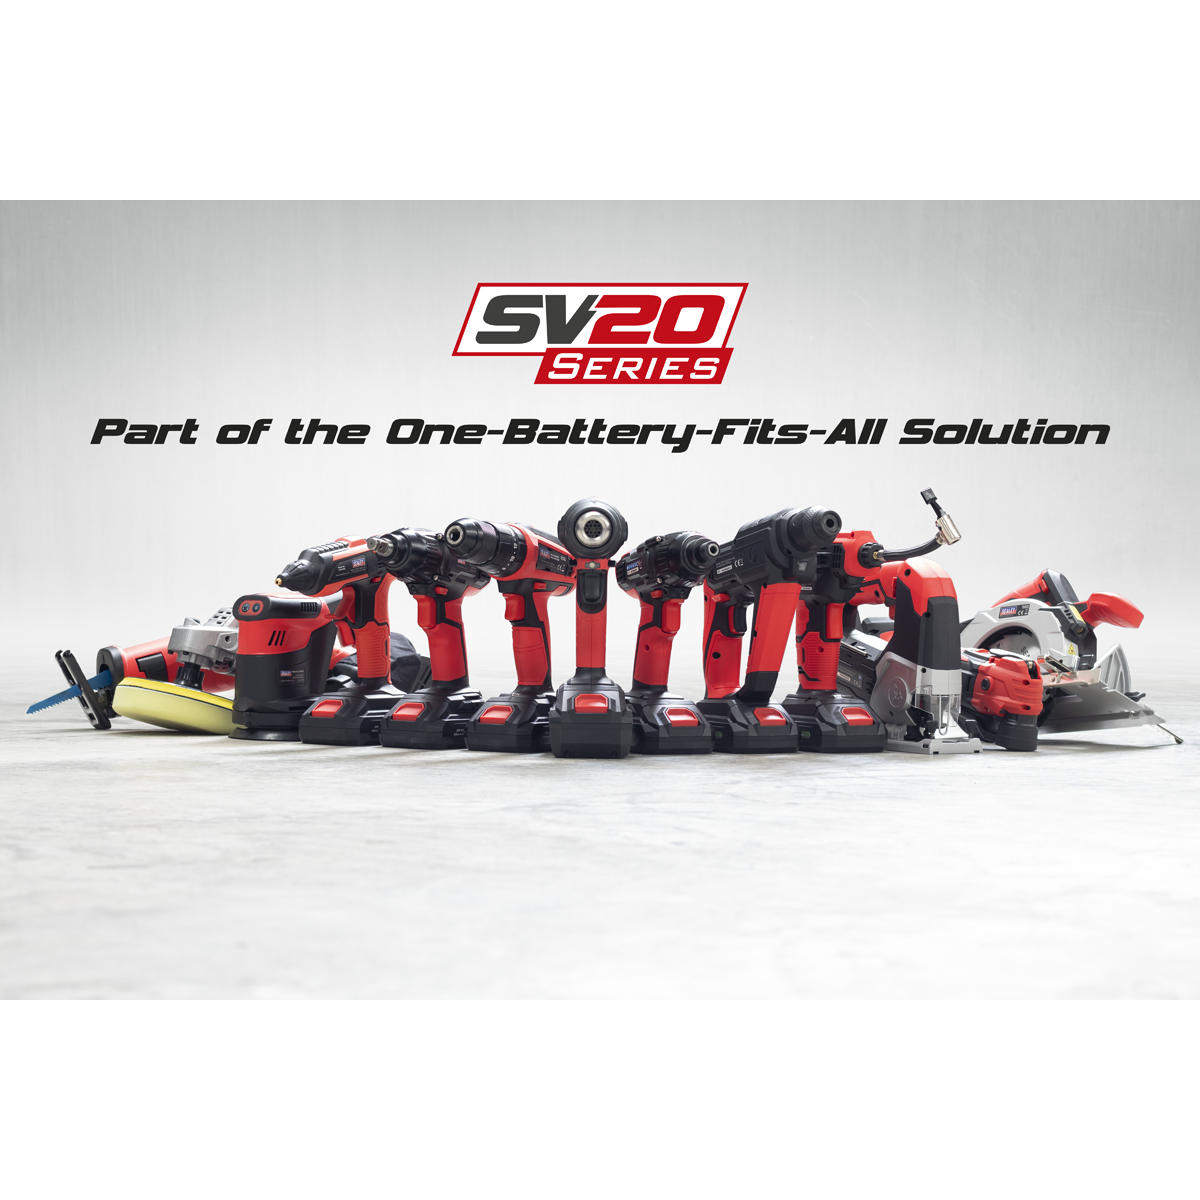 Sealey SV20 Series range of cordless power tools